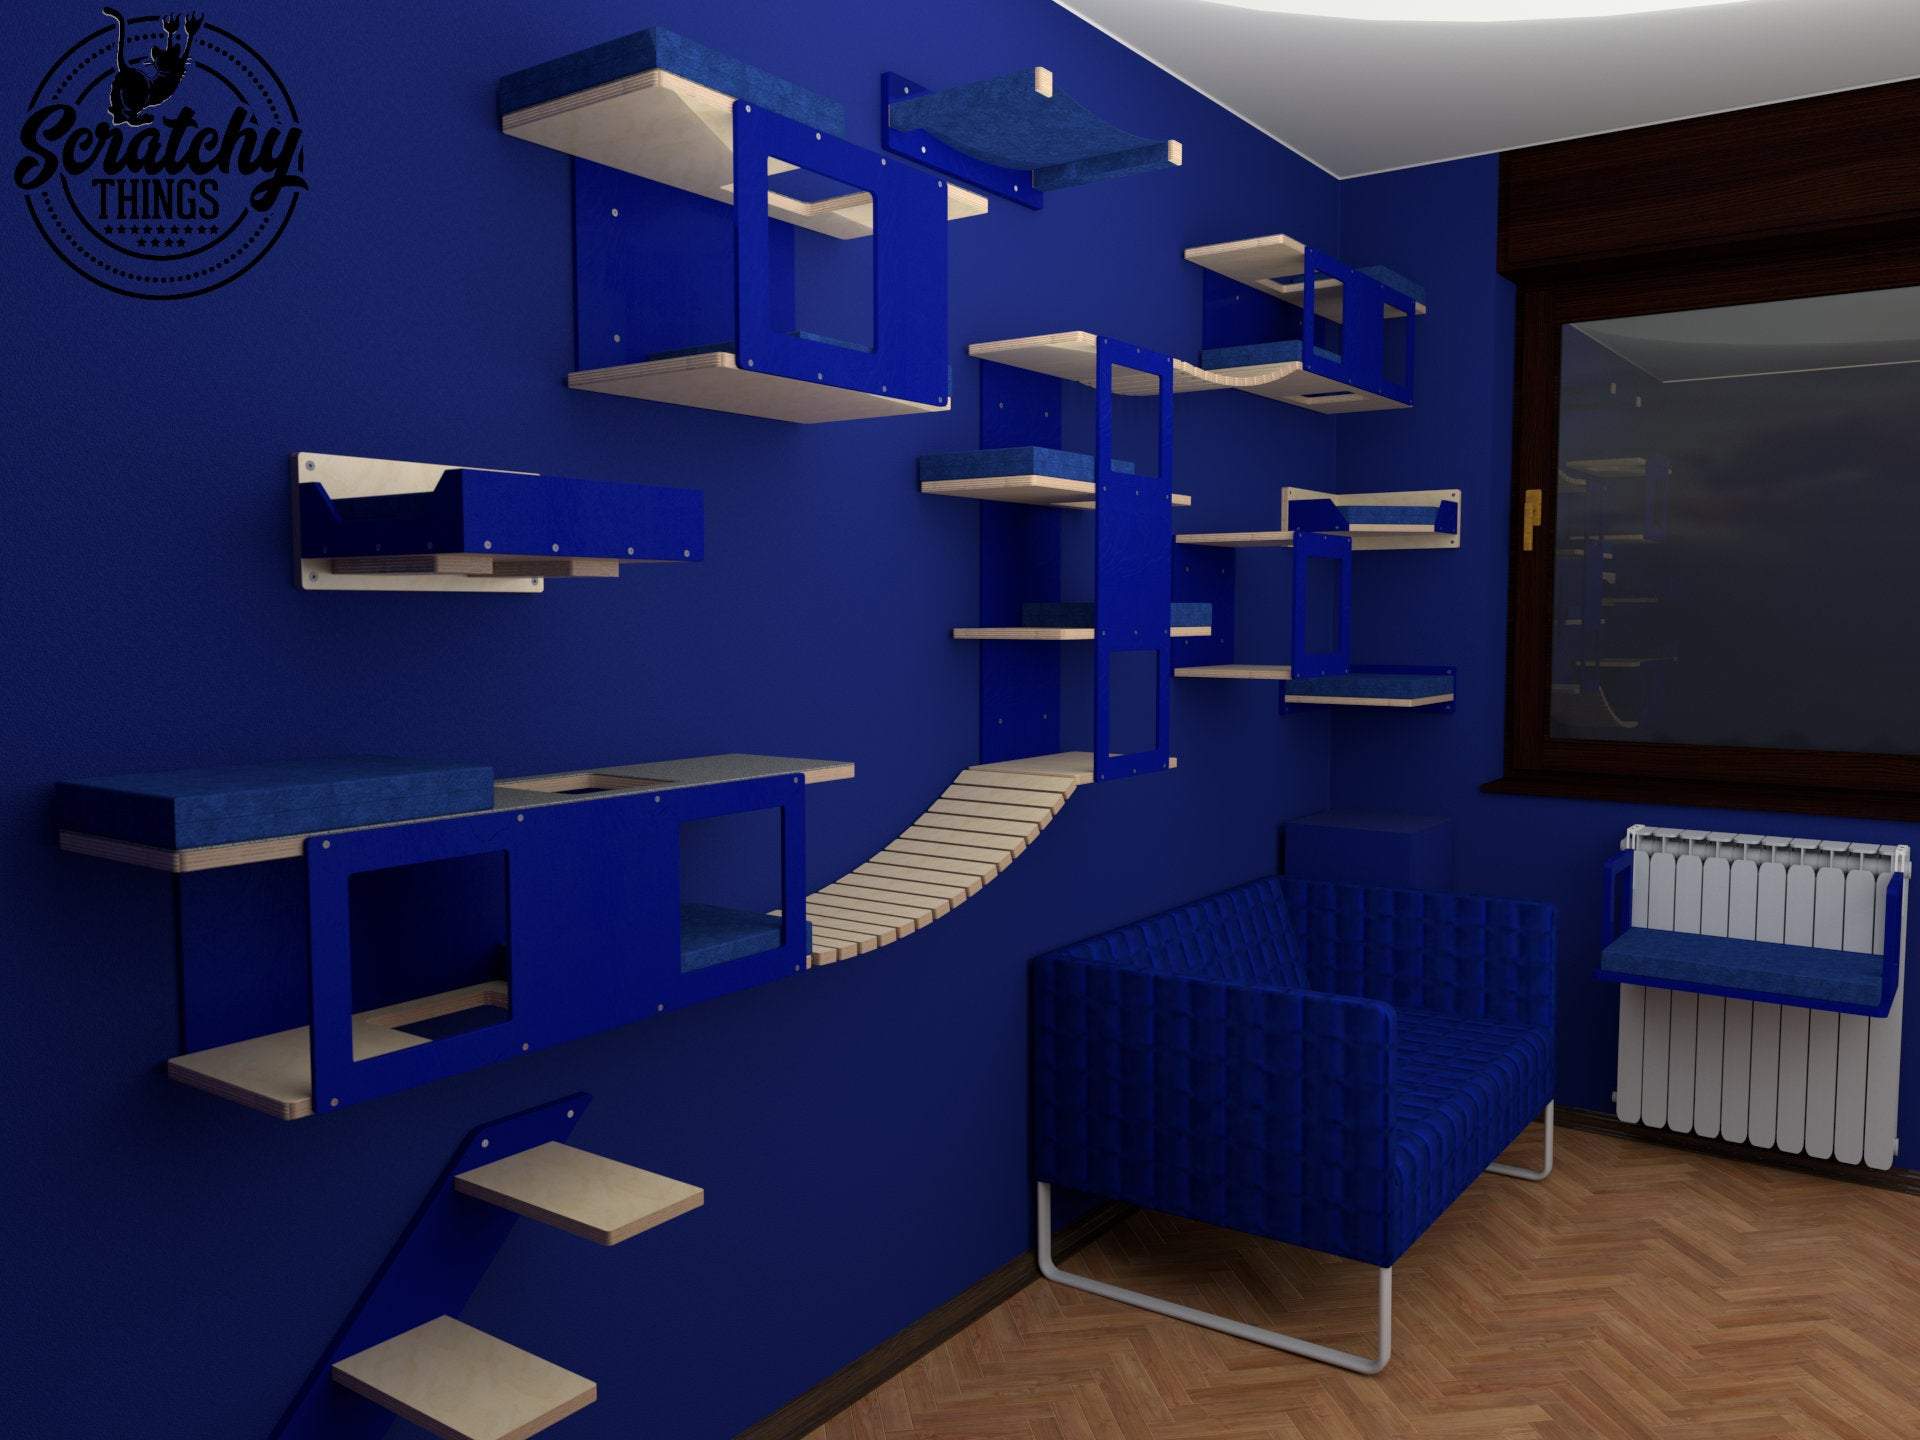 Cat Wall Shelf Bed Bundle - Blue Room Bundle - Scratchy Things Premium Pet Furniture